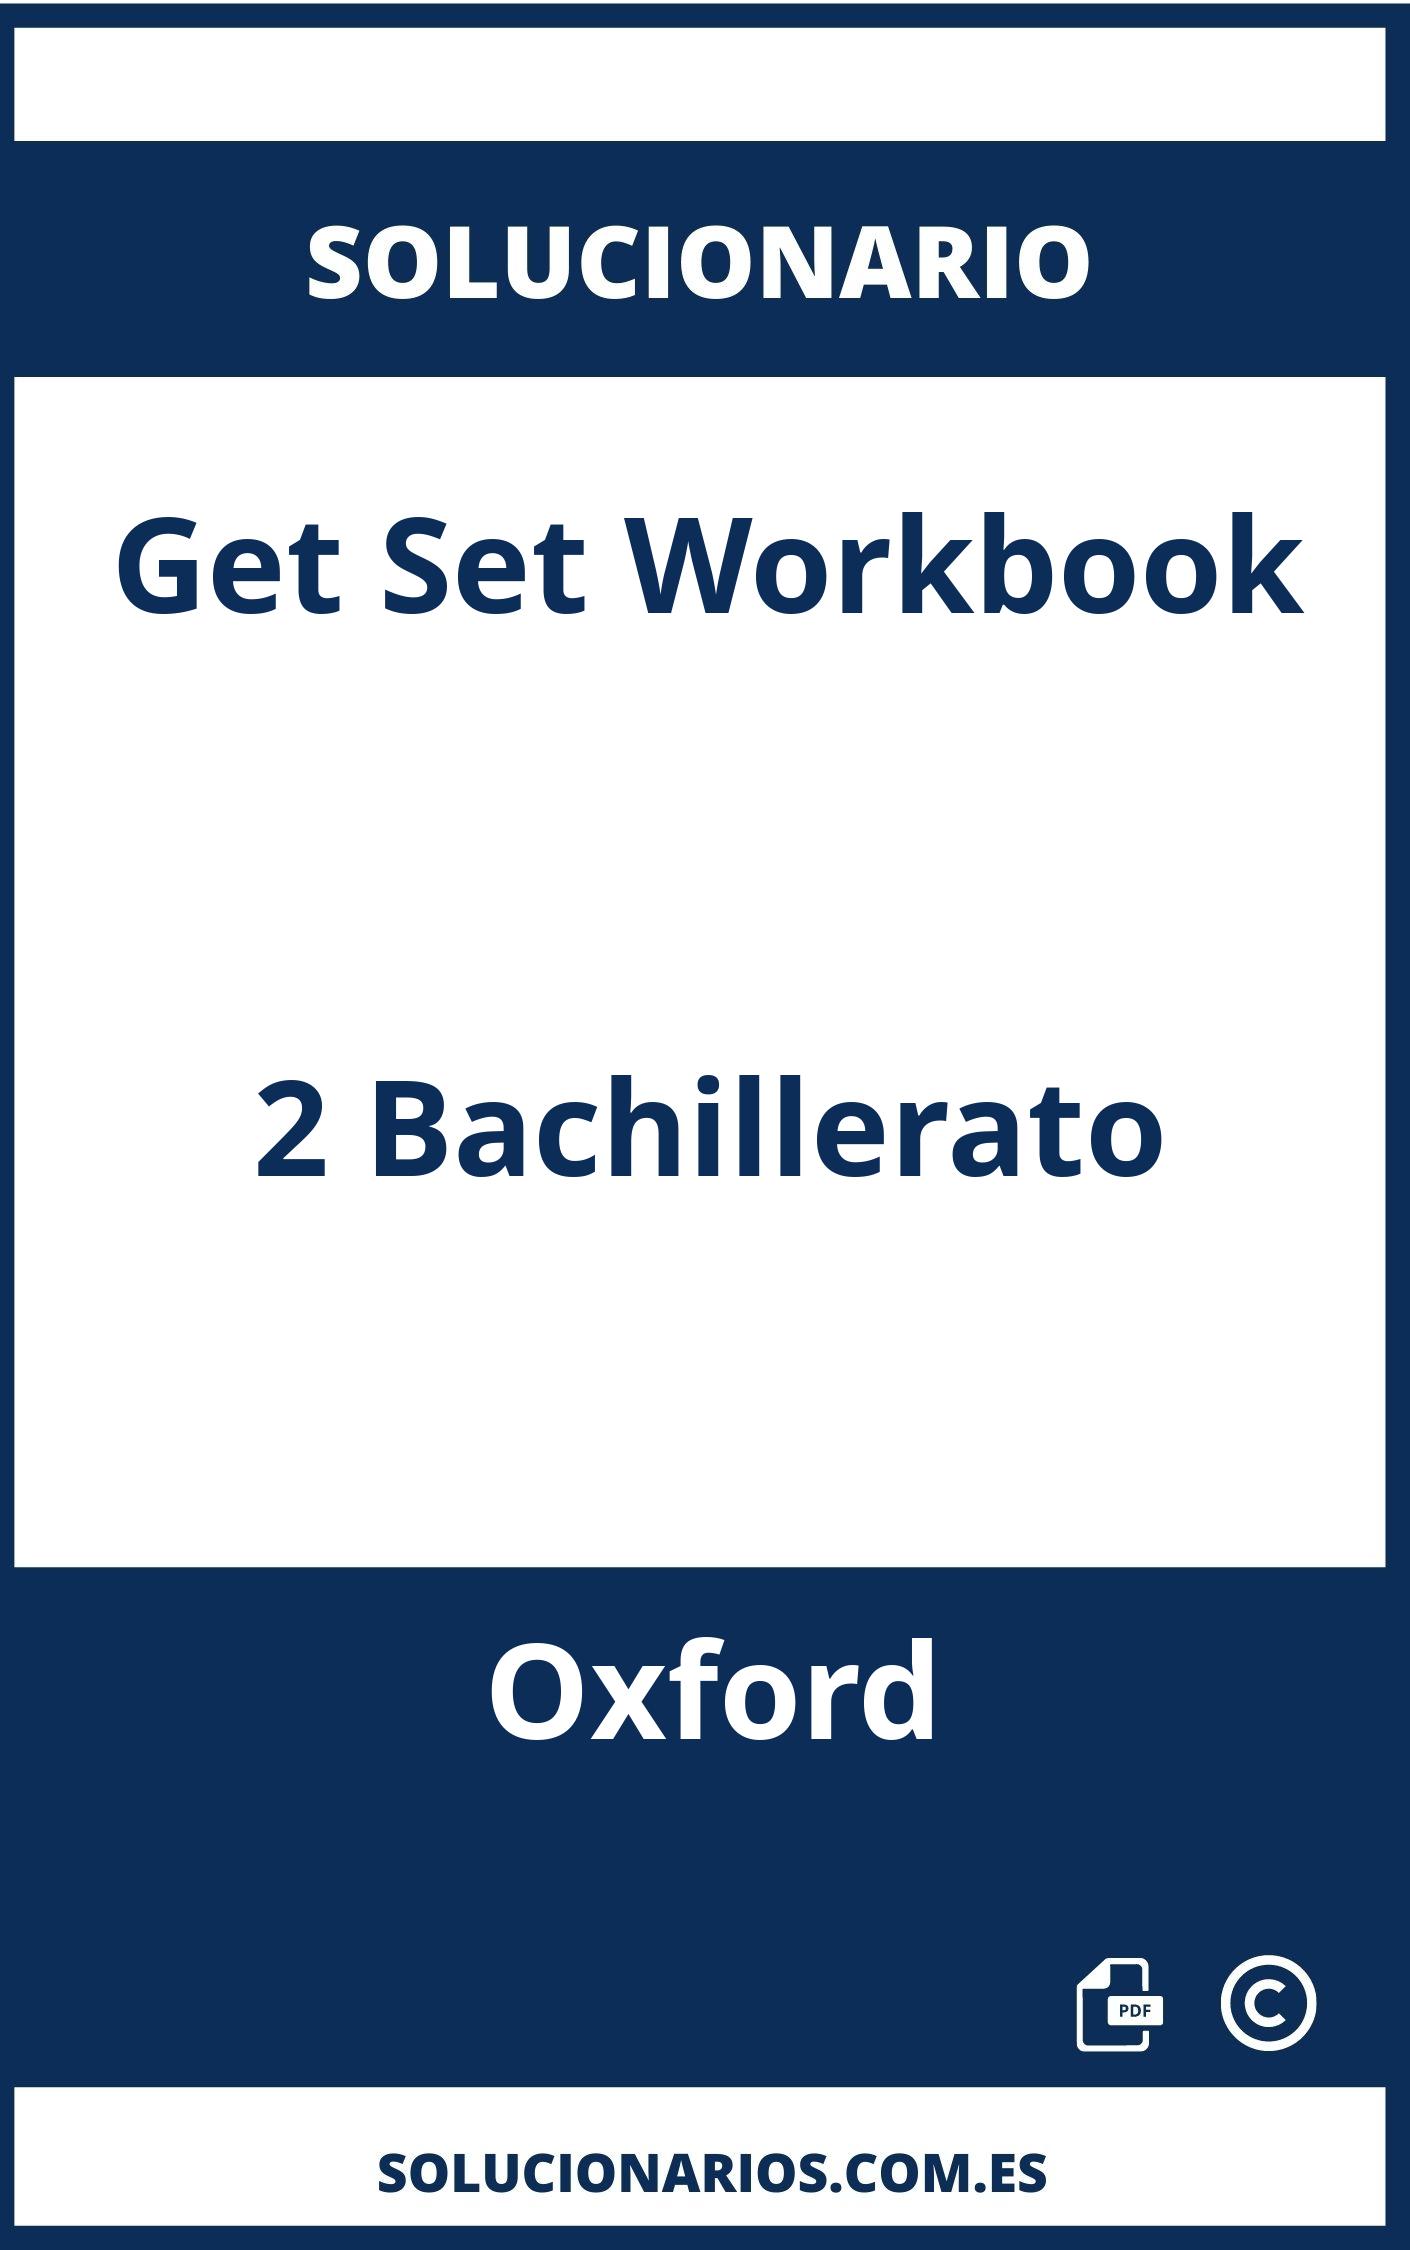 Solucionario Get Set Workbook 2 Bachillerato Oxford